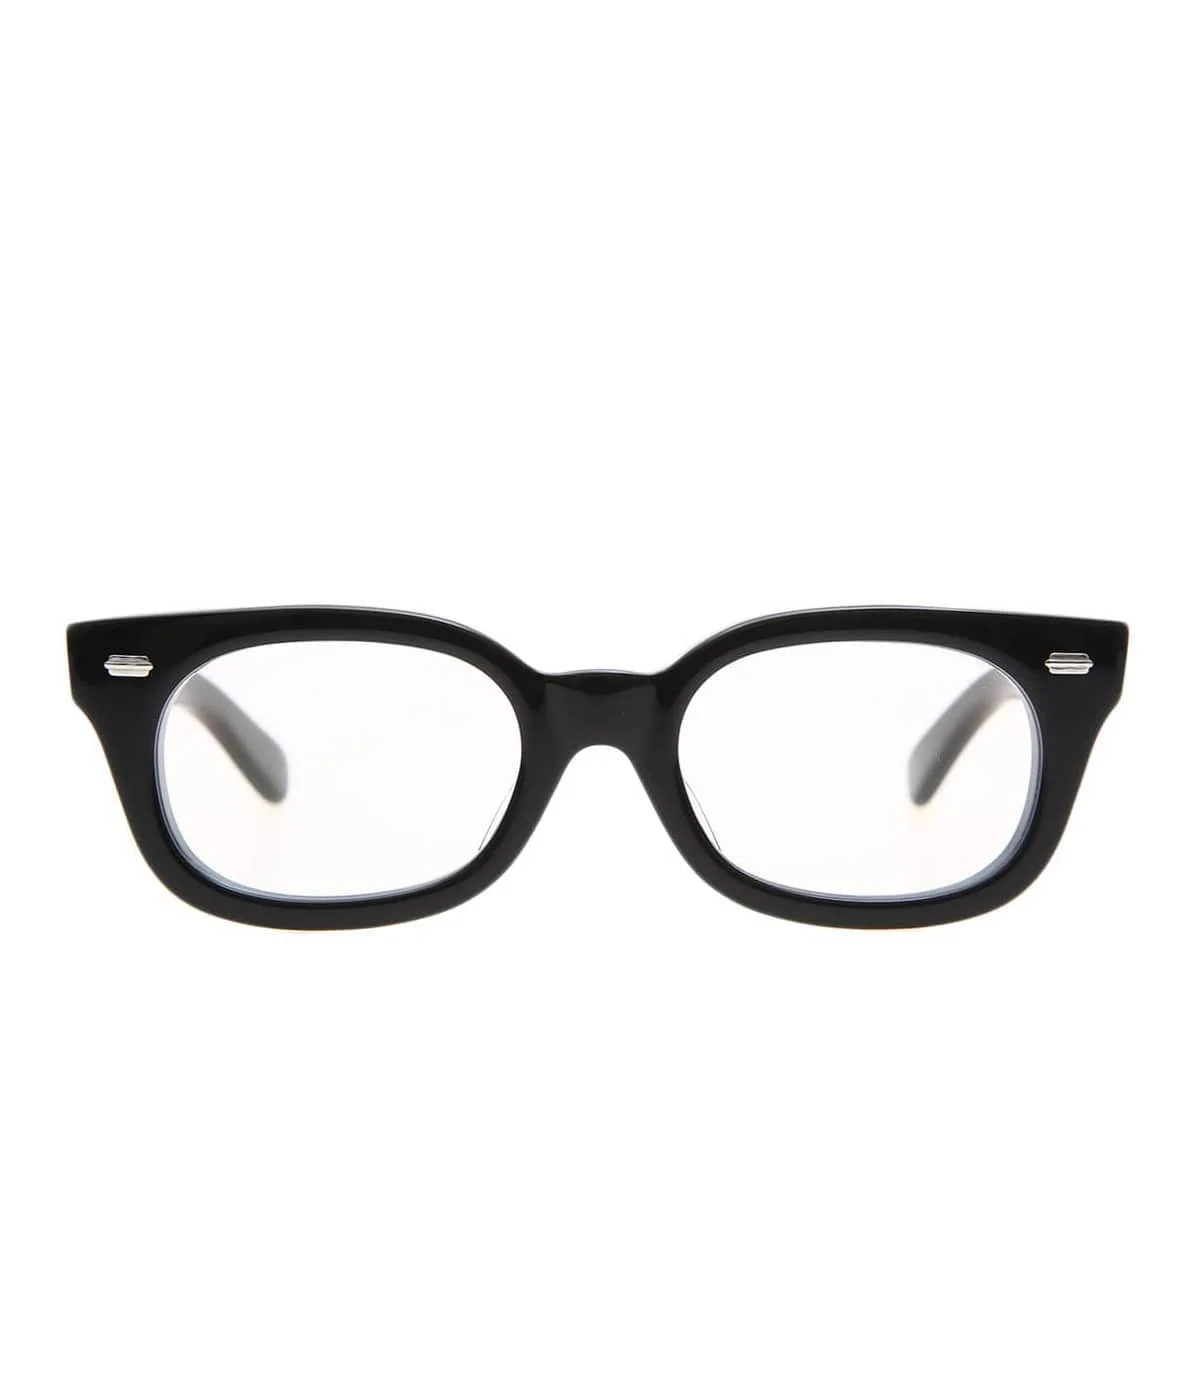 EFFECTOR MUSEUMARK huzz-hs 別注 サングラス 眼鏡何点か質問させてください